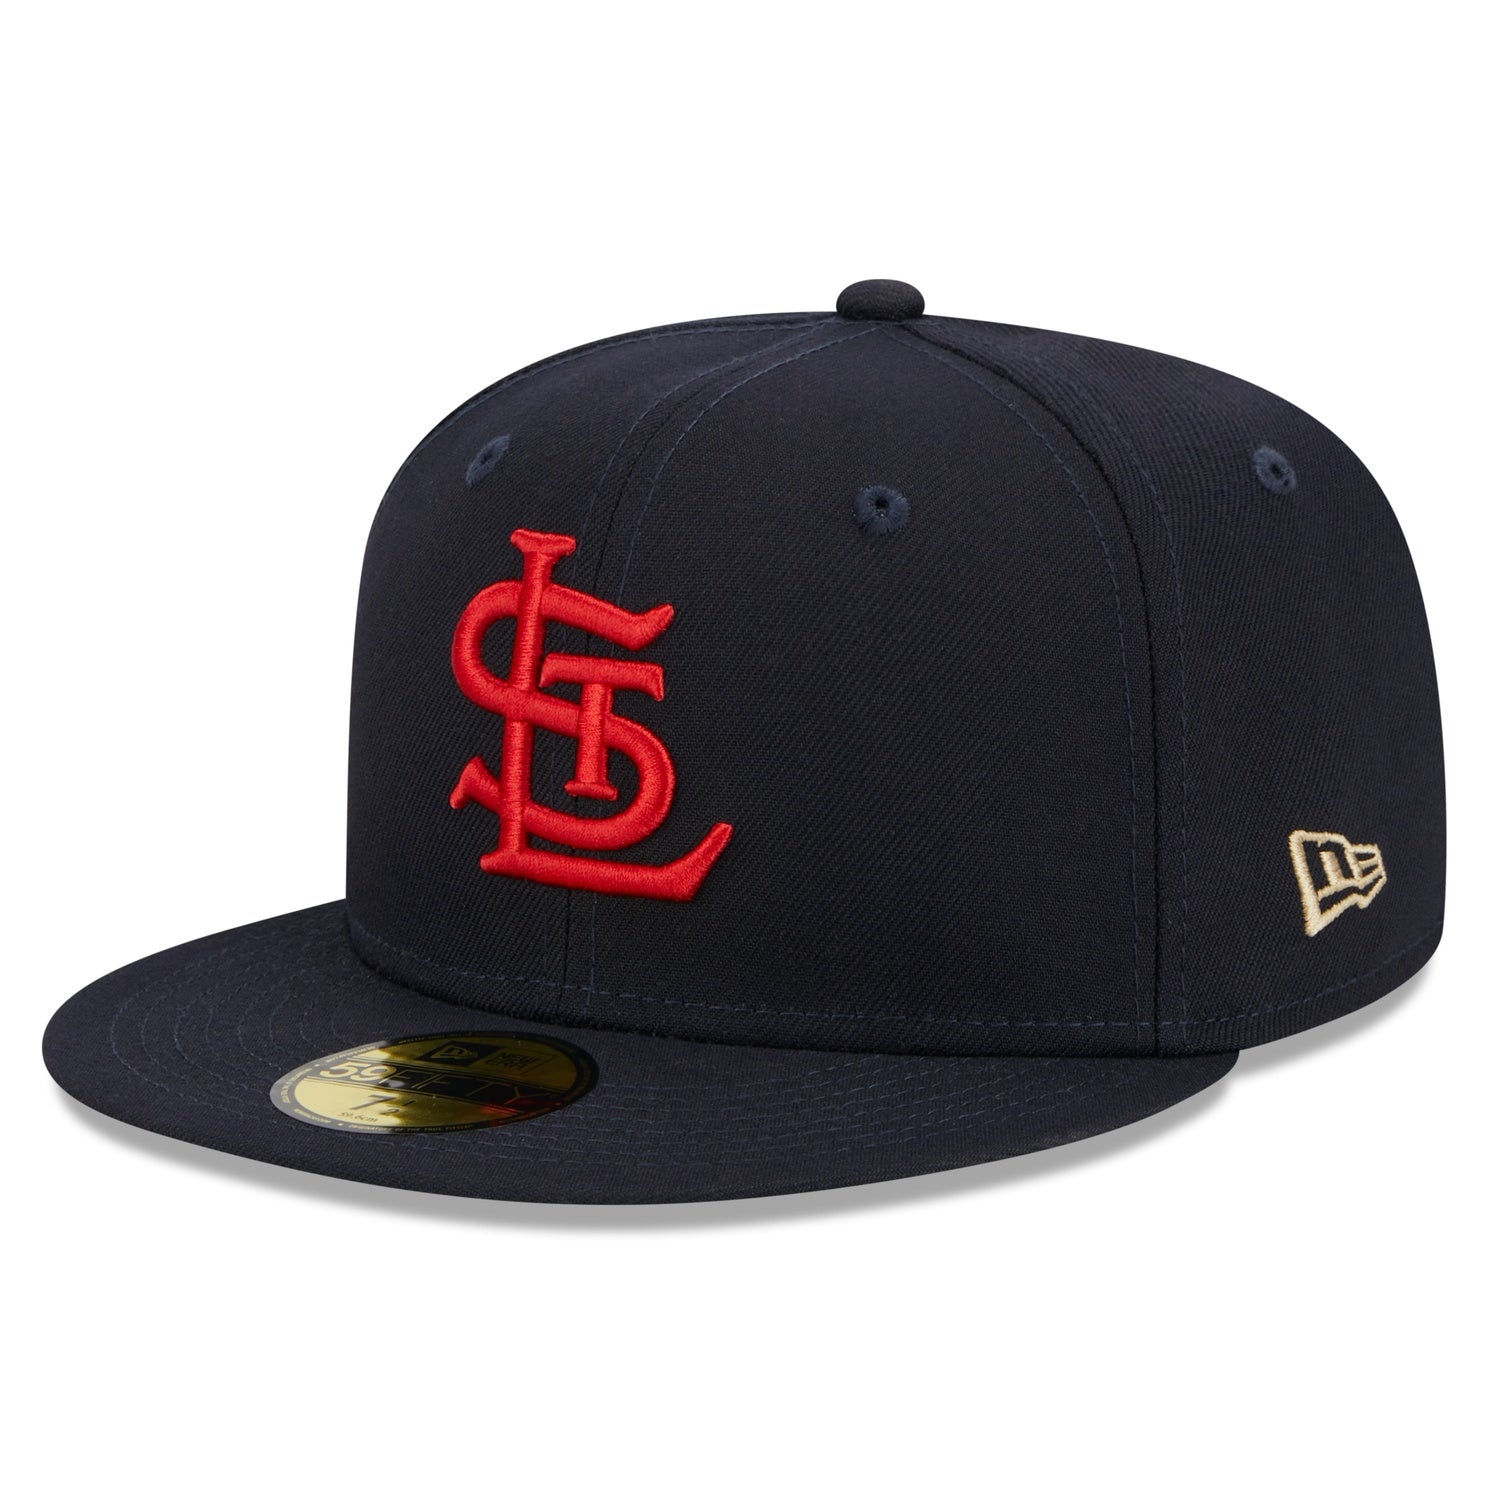 Shop New Era 59Fifty St. Louis Cardinals World Series Side Patch